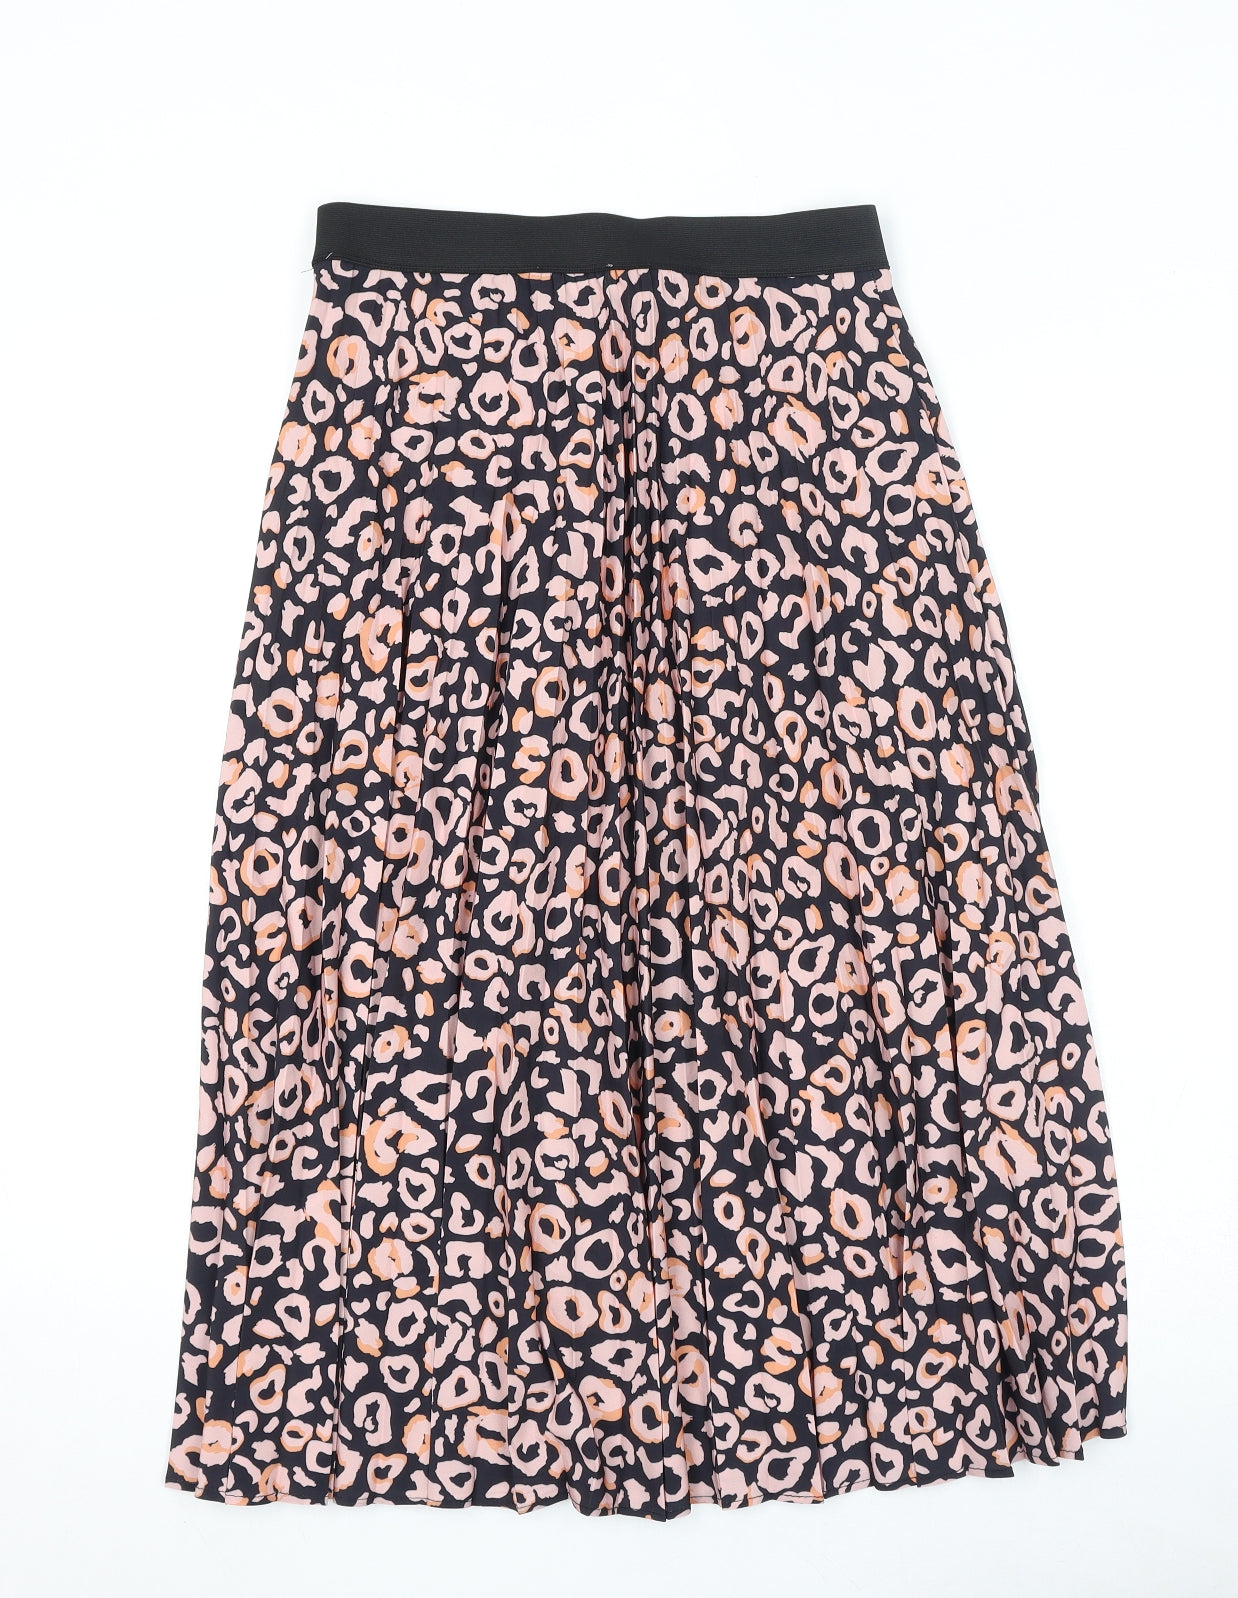 Red Herring Womens Black Animal Print Polyester Peasant Skirt Size 12 - Leopard Pattern